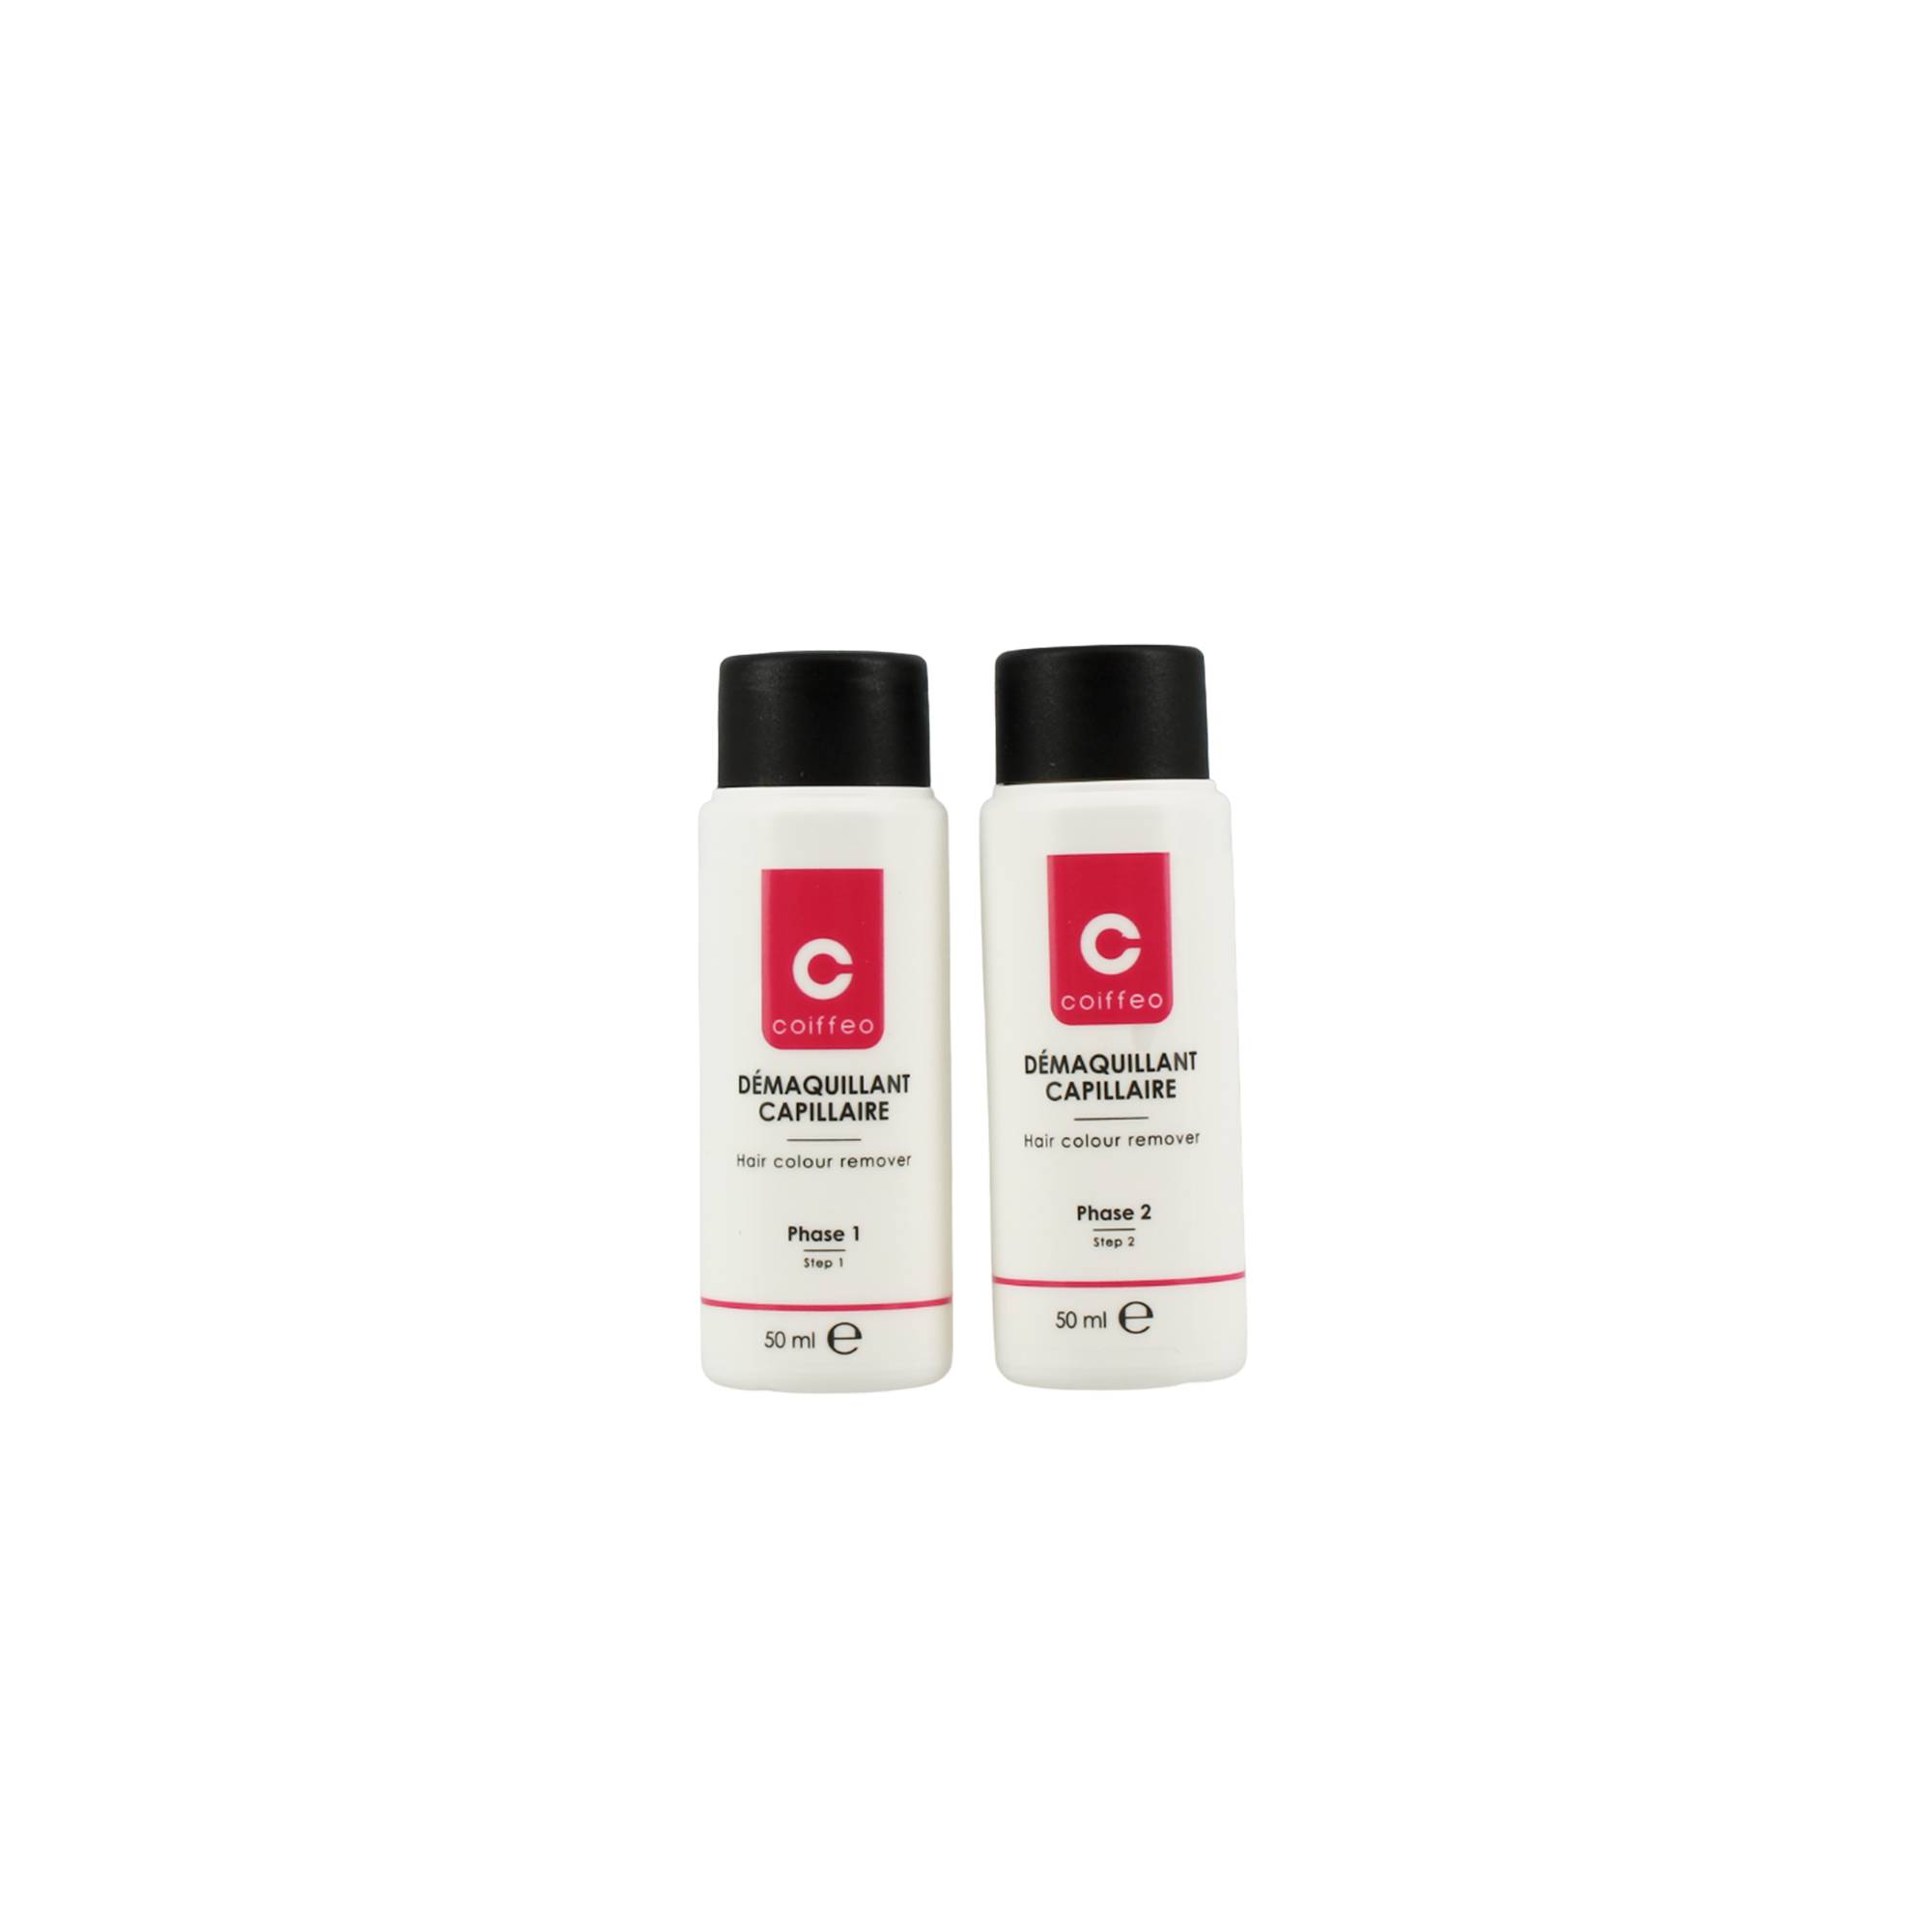 Démaquillant capillaire Hair colour remover (2x50ml) de la marque Coiffeo Contenance 100ml - 2